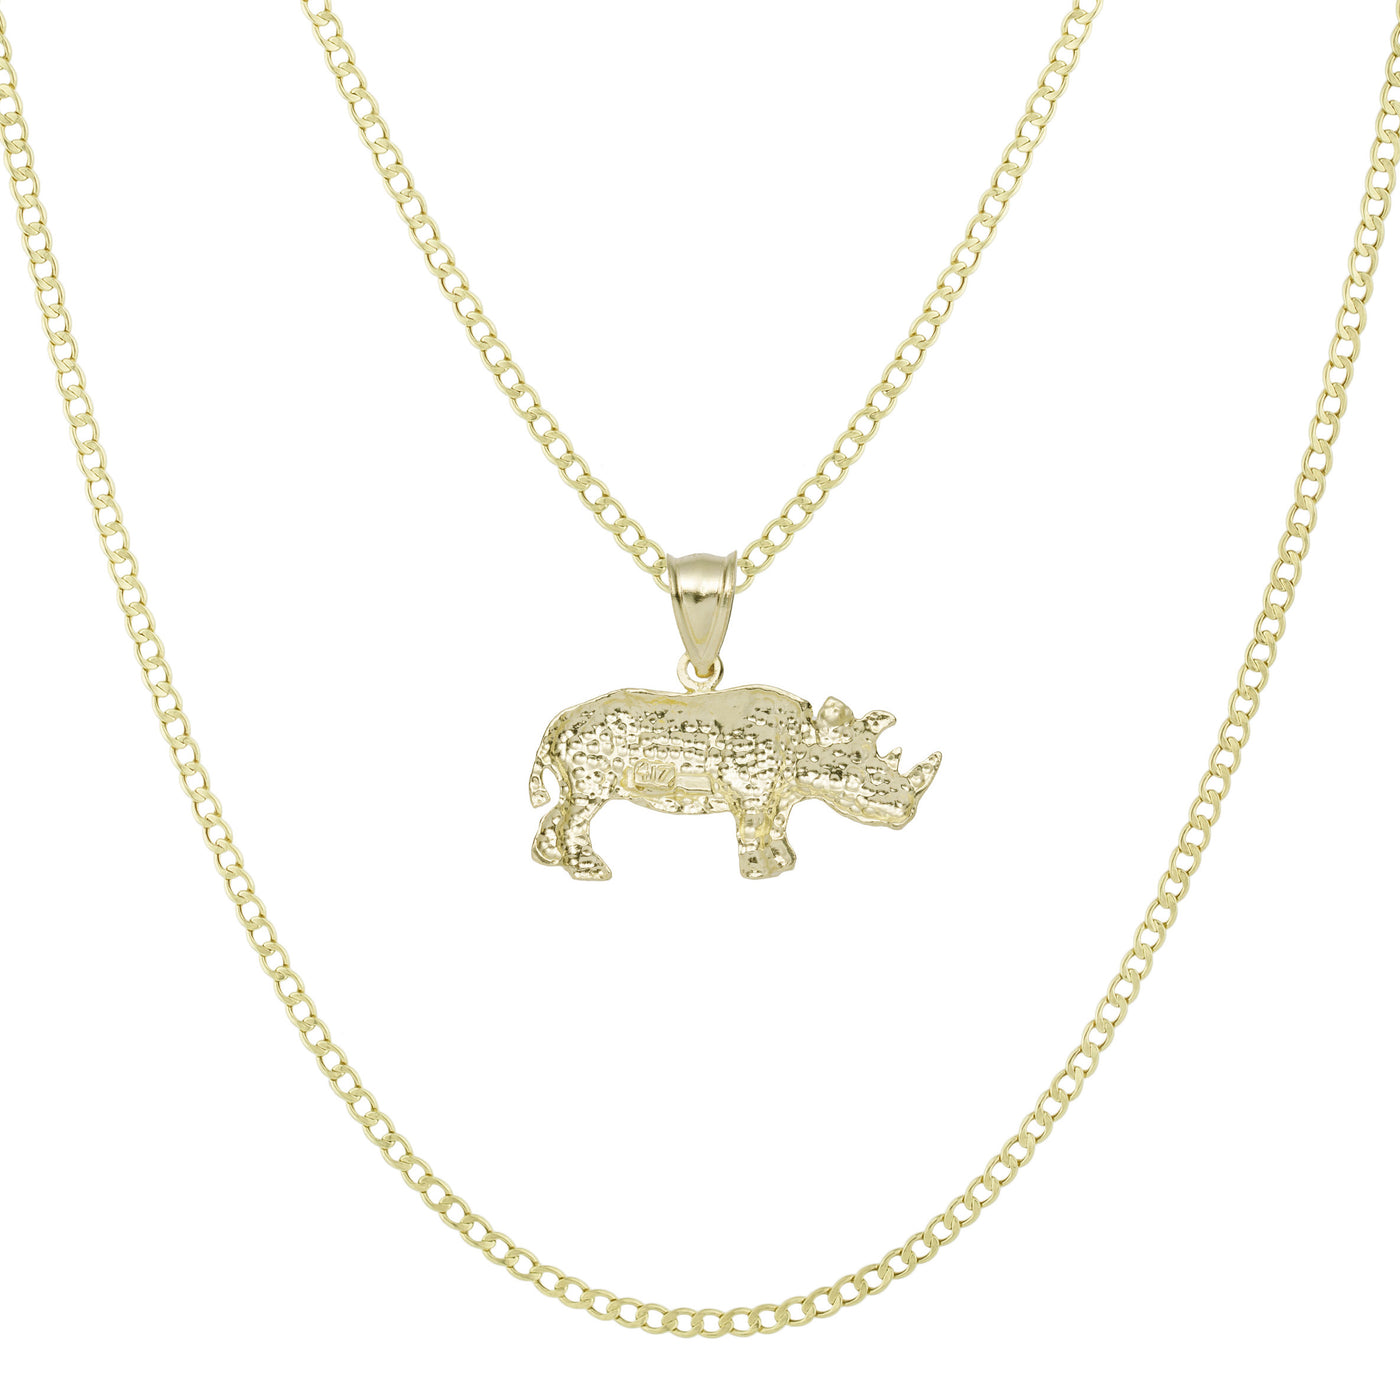 7/8" Diamond Cut Rhinoceros Pendant & Chain Necklace Set 10K Yellow Gold